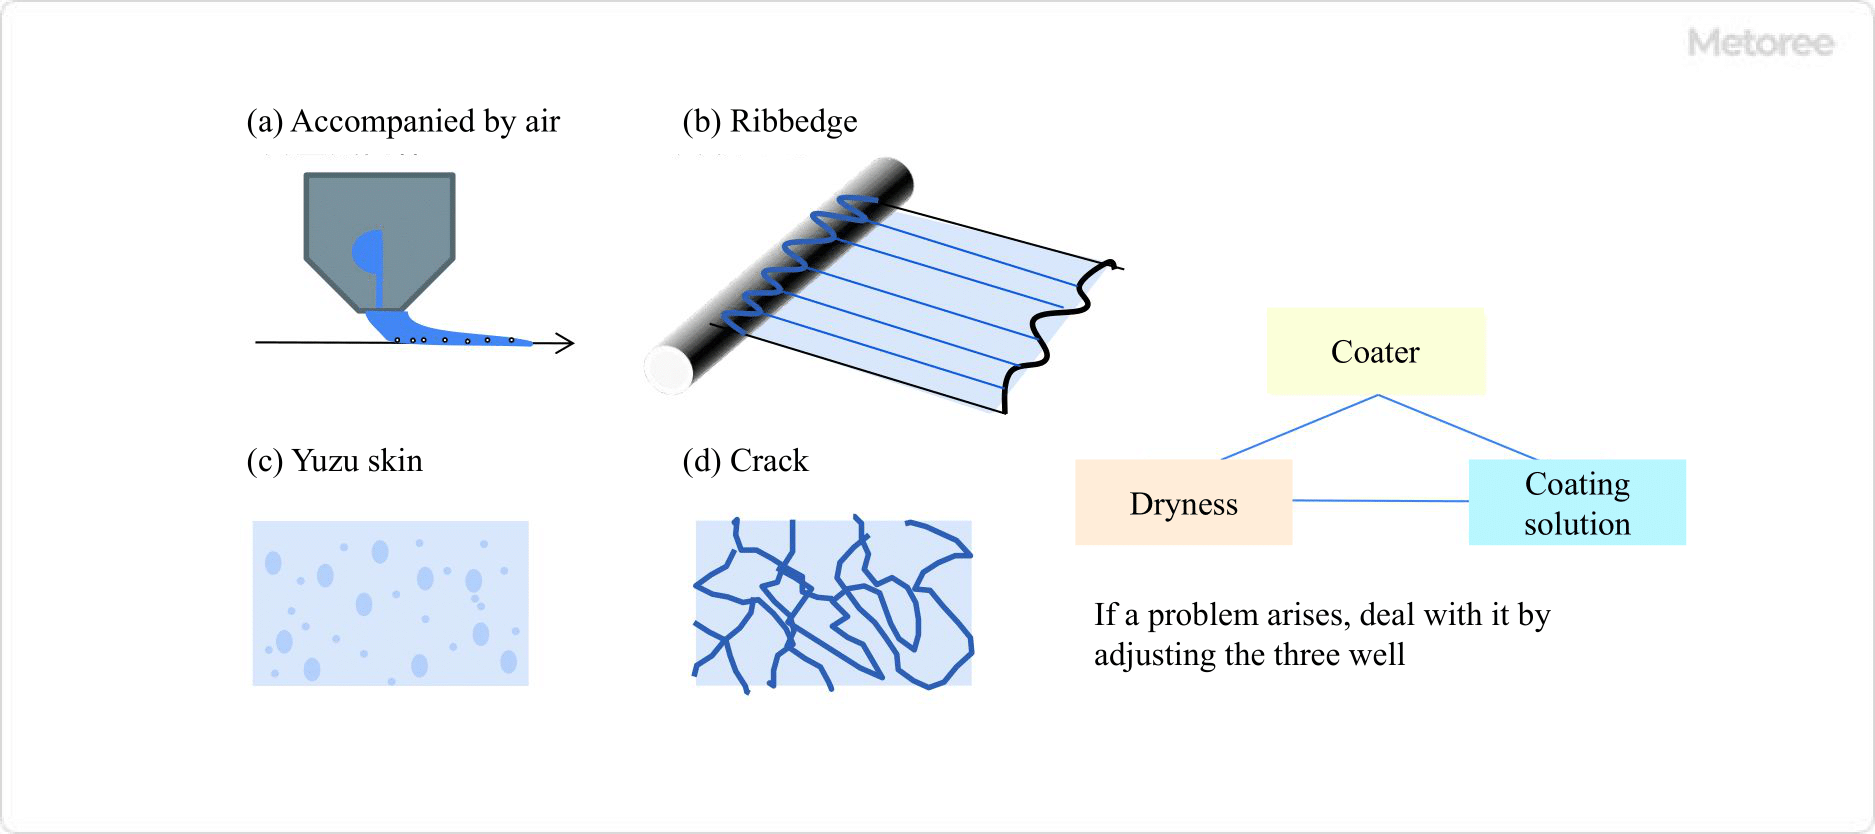 Figure 3. Lack of Coating and Coating Equipment